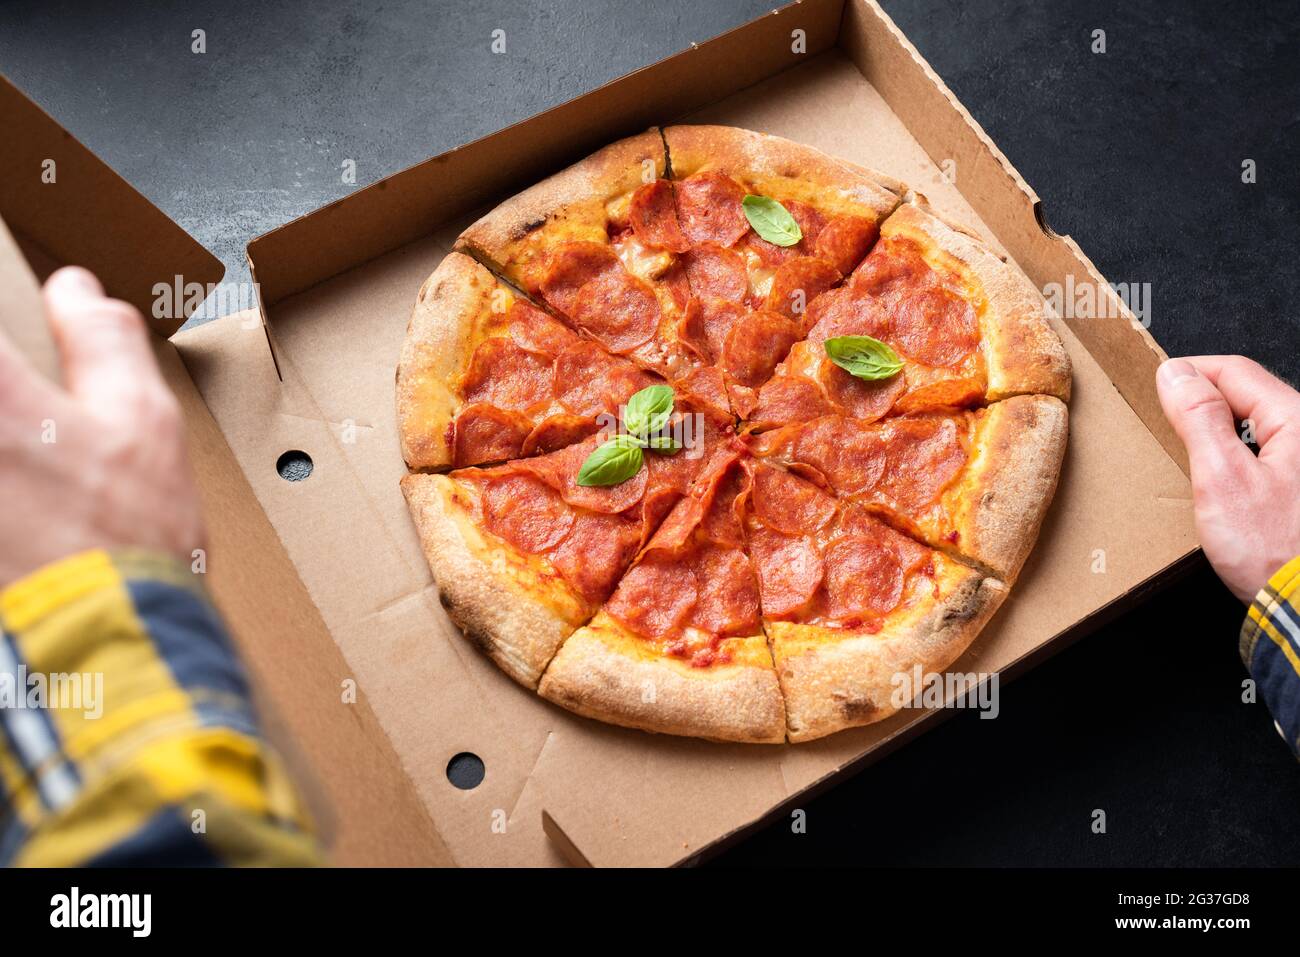 Pepperoni pizza in carton box. Food delivery concept Stock Photo